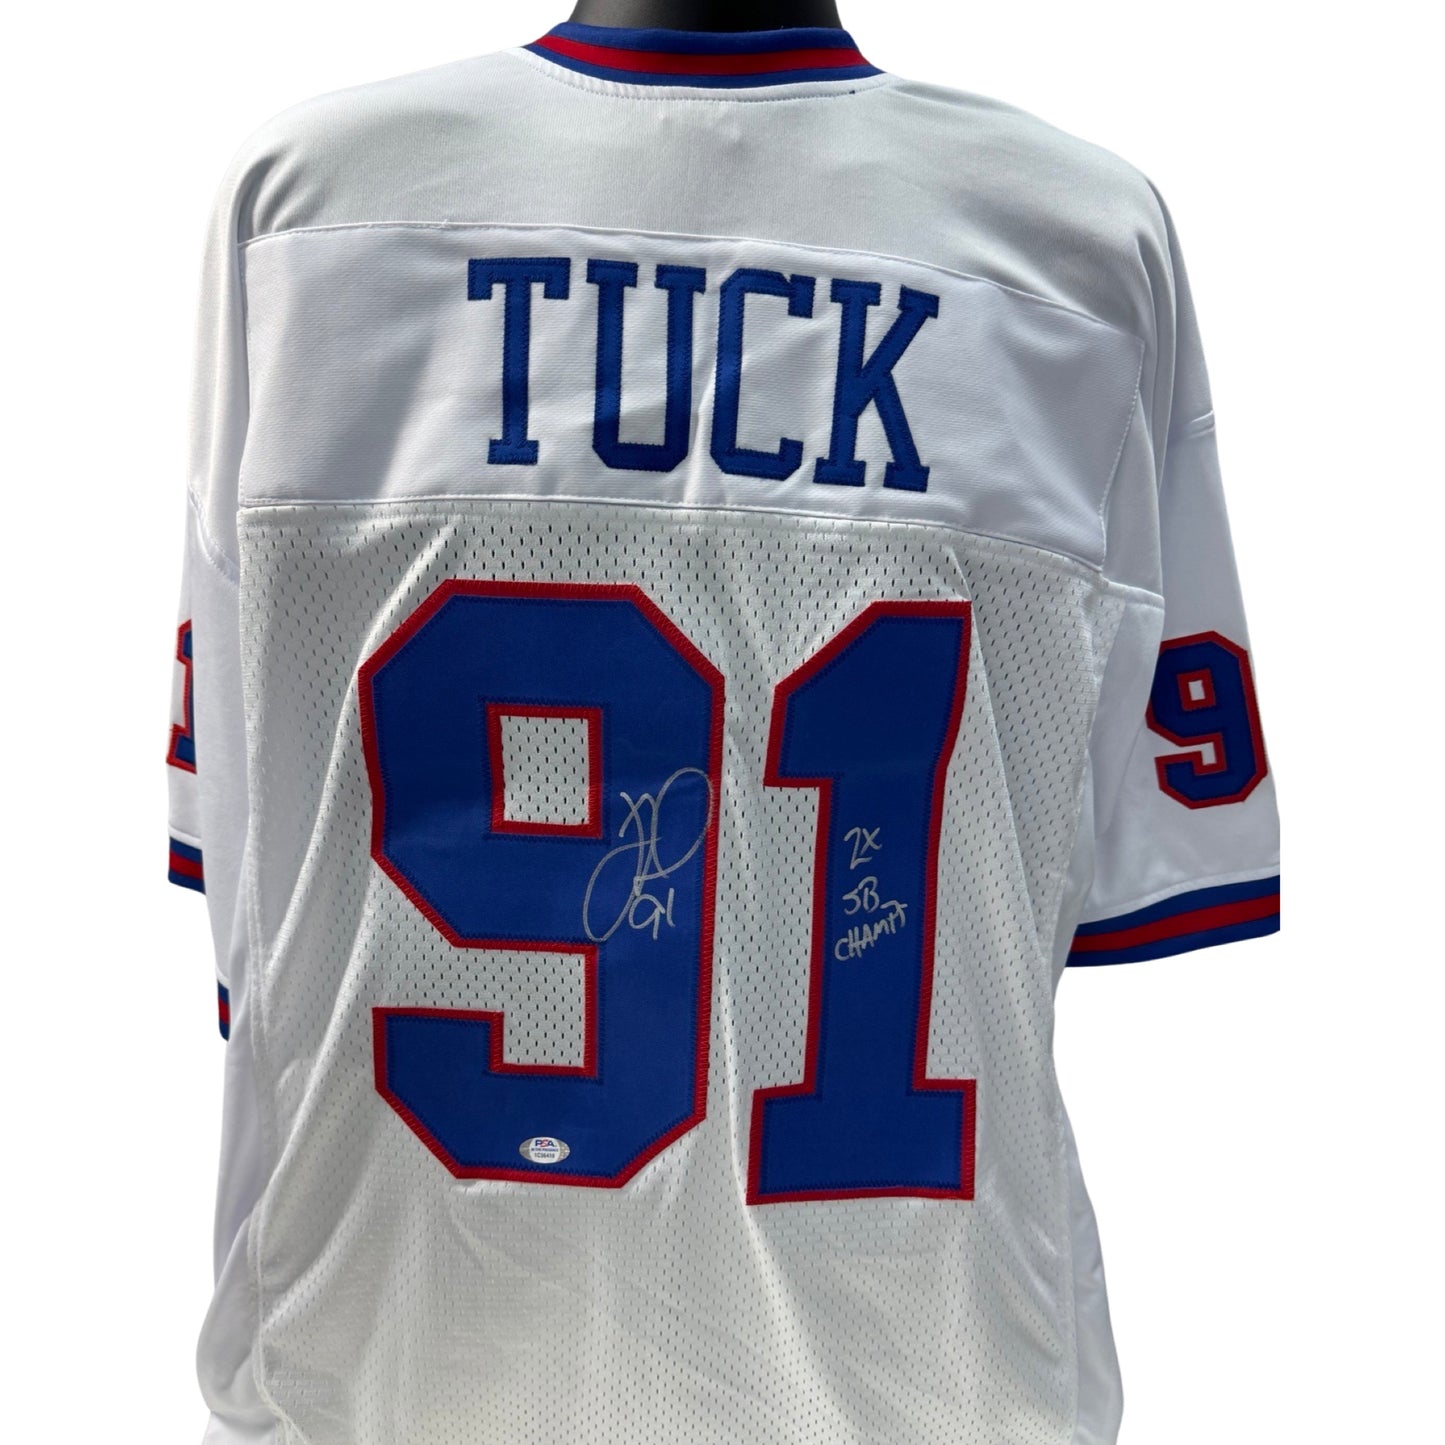 Justin Tuck Autographed New York Giants Color Rush Jersey “2x SB Champ” Inscription PSA